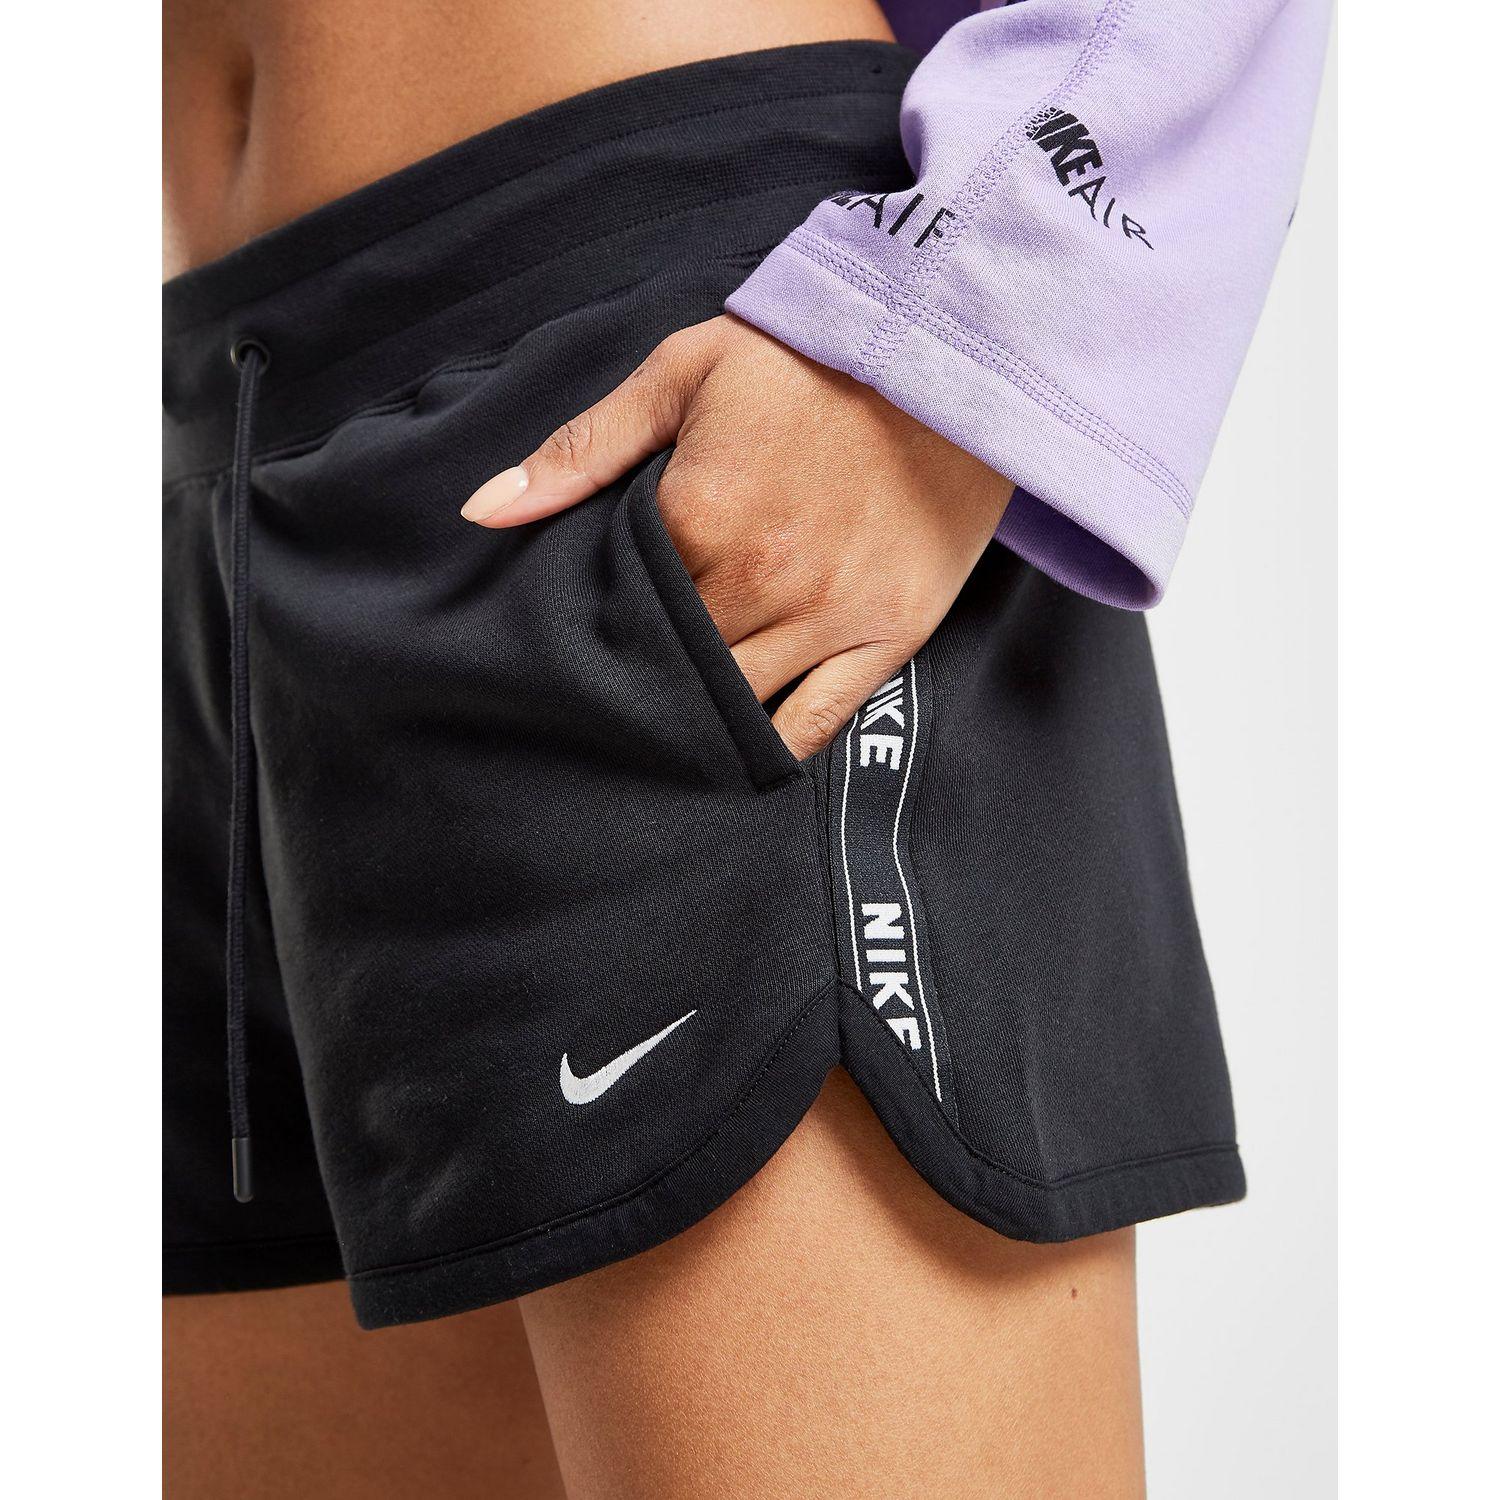 Nike Cotton Tape Shorts in Black/White 